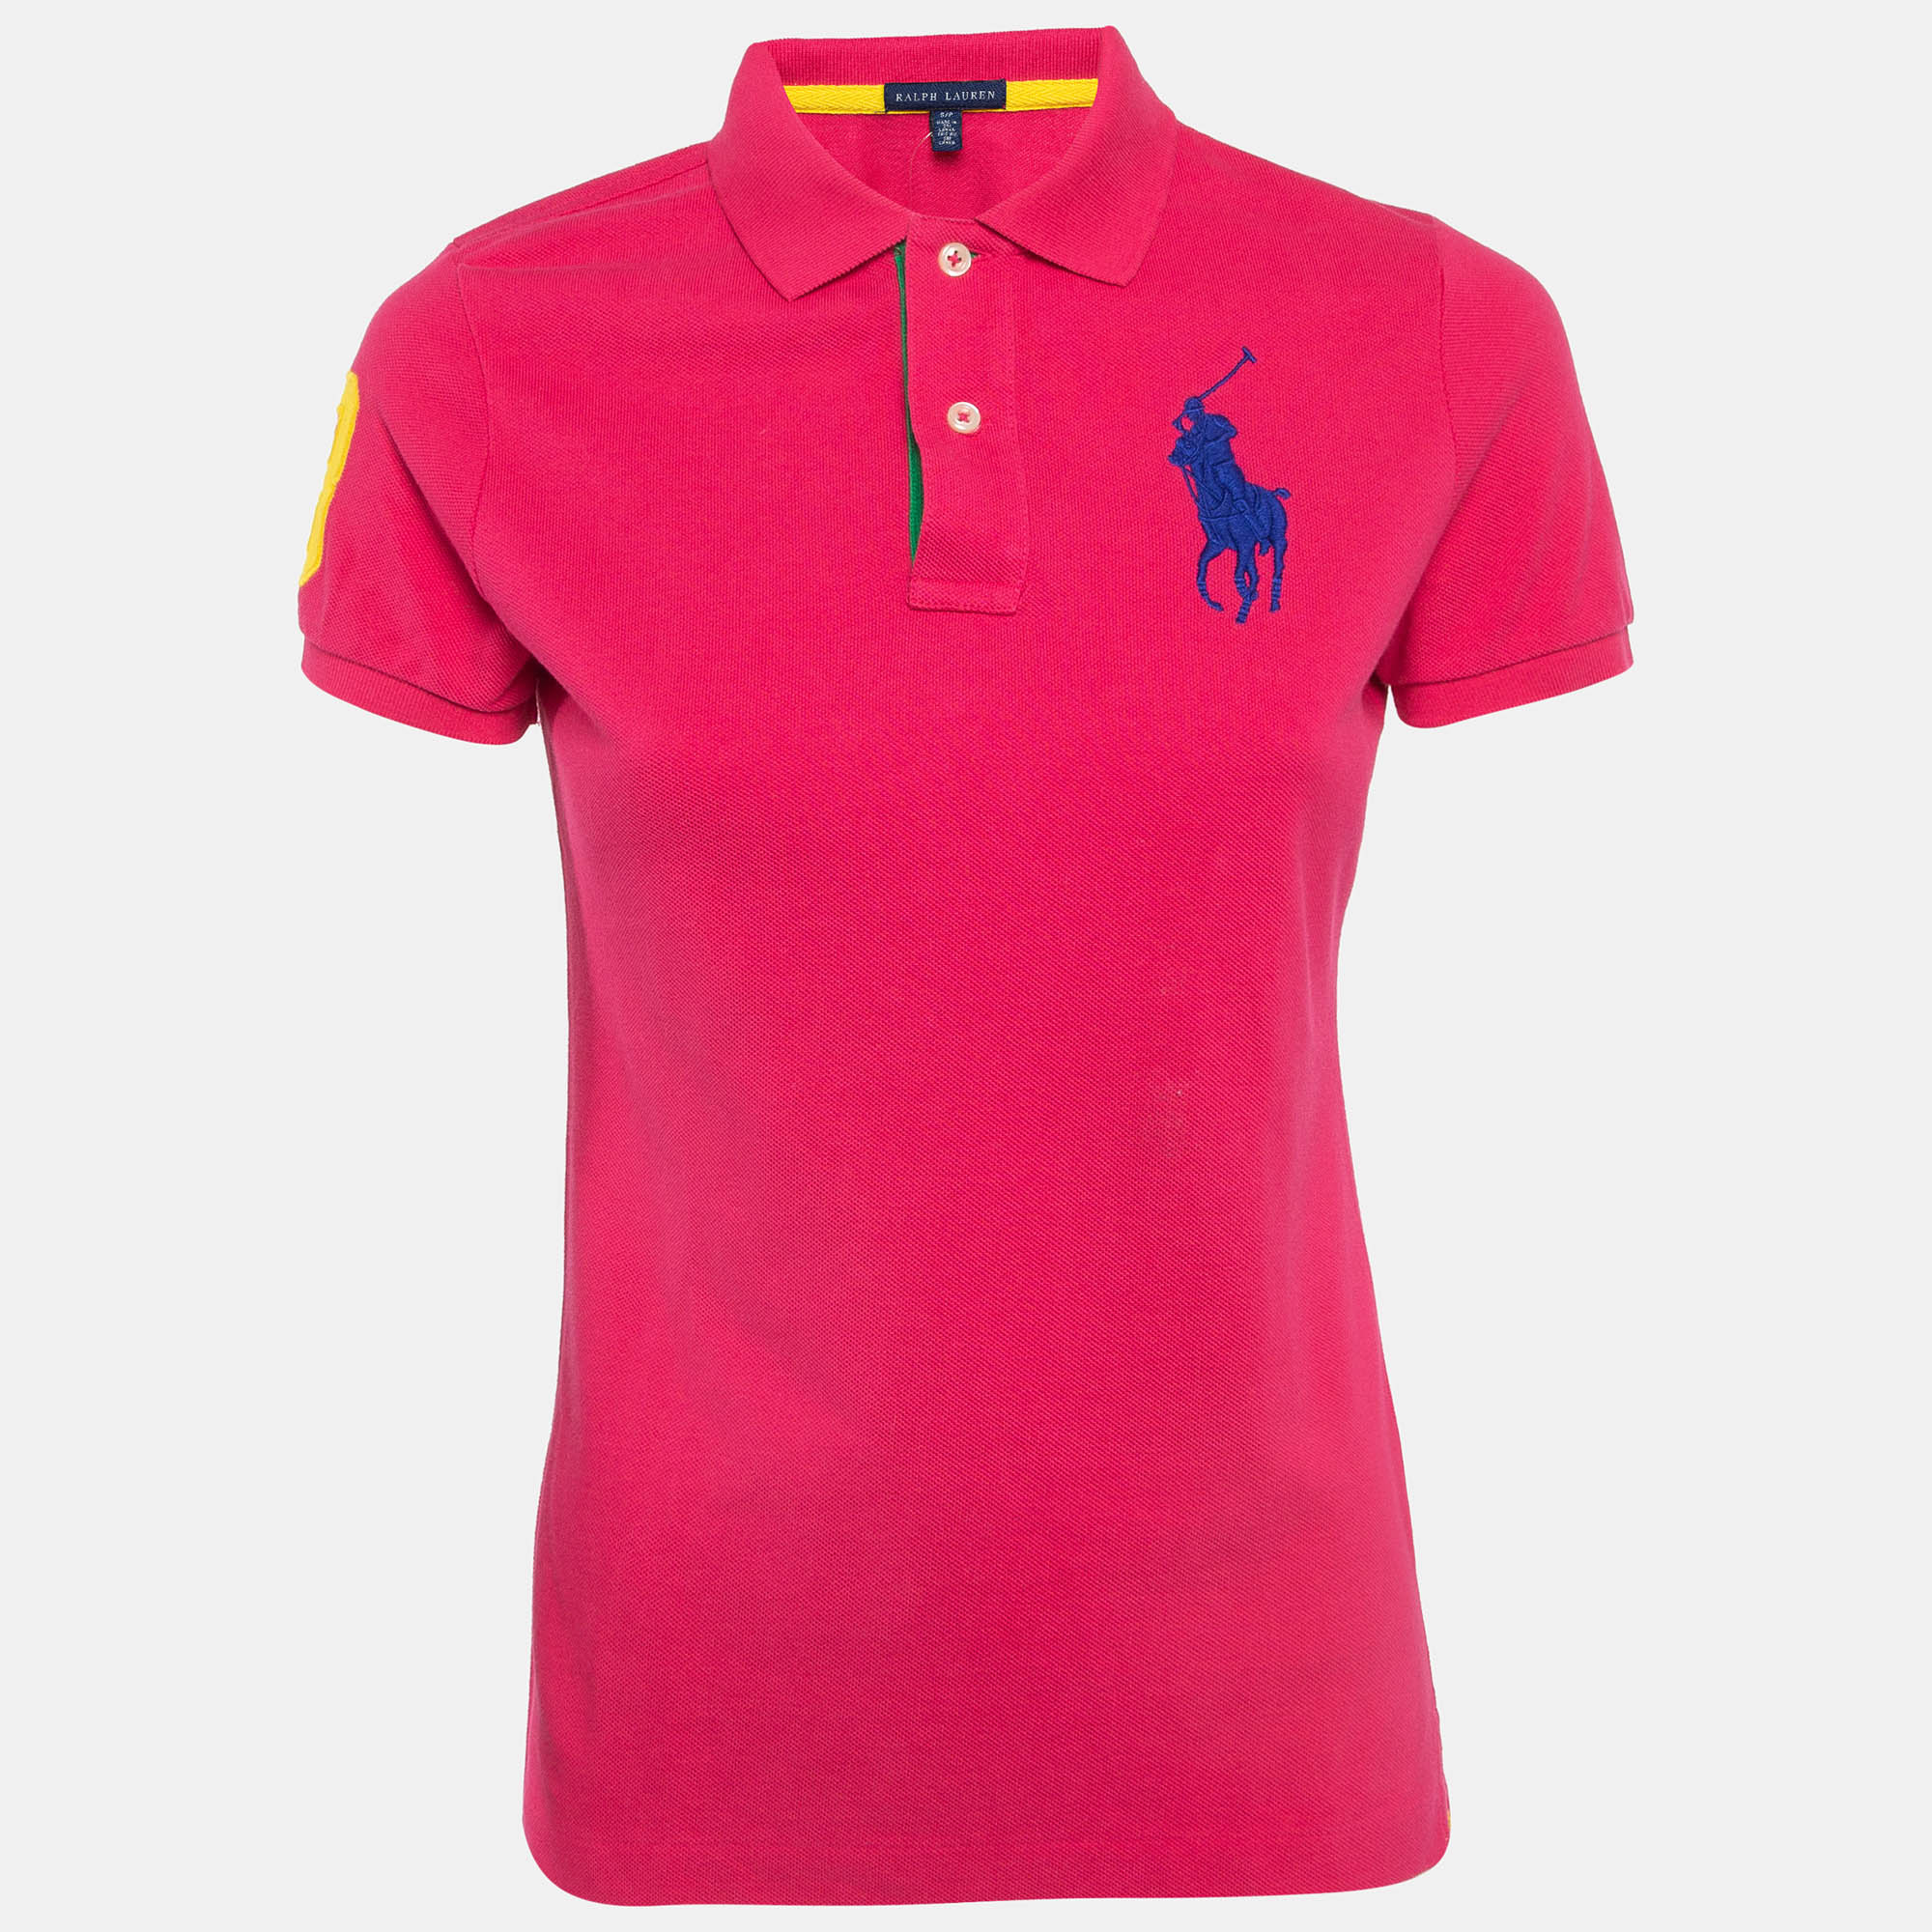 Ralph lauren pink embroidered cotton pique polo t-shirt s